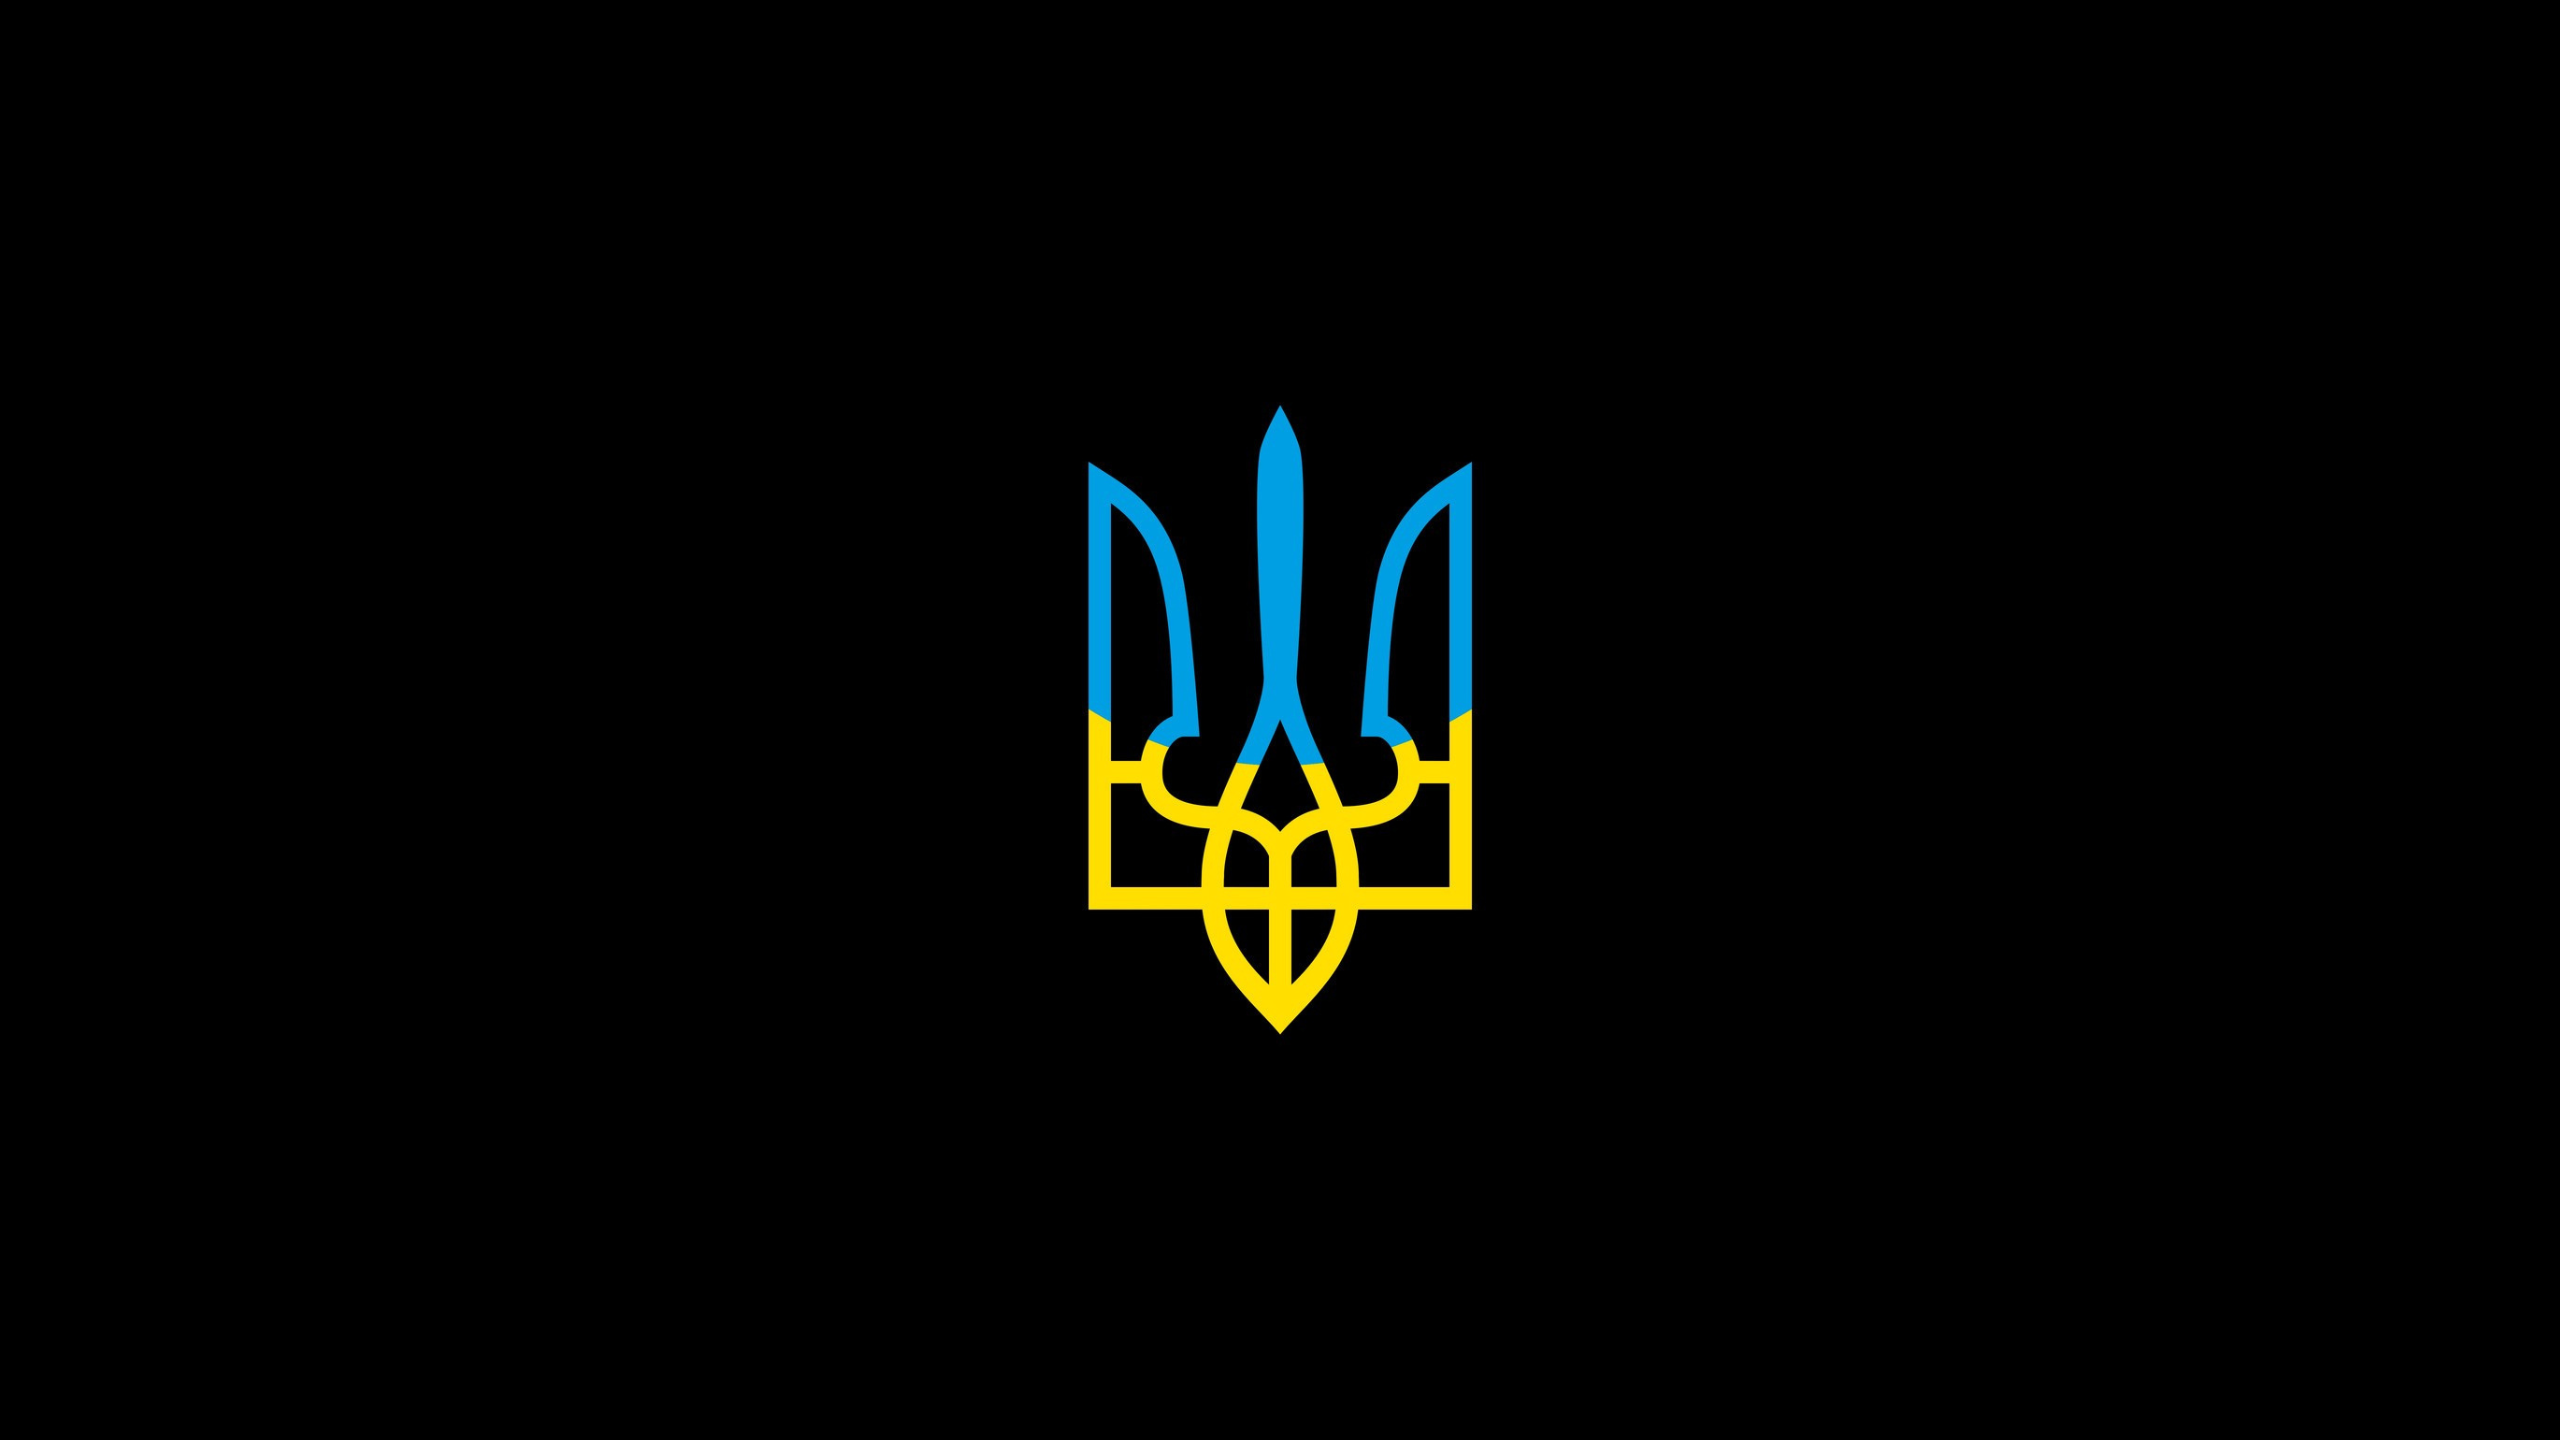 Ukraine Coat Of Arms Black Background Minimalism Blue Yellow Simple Background 2560x1440